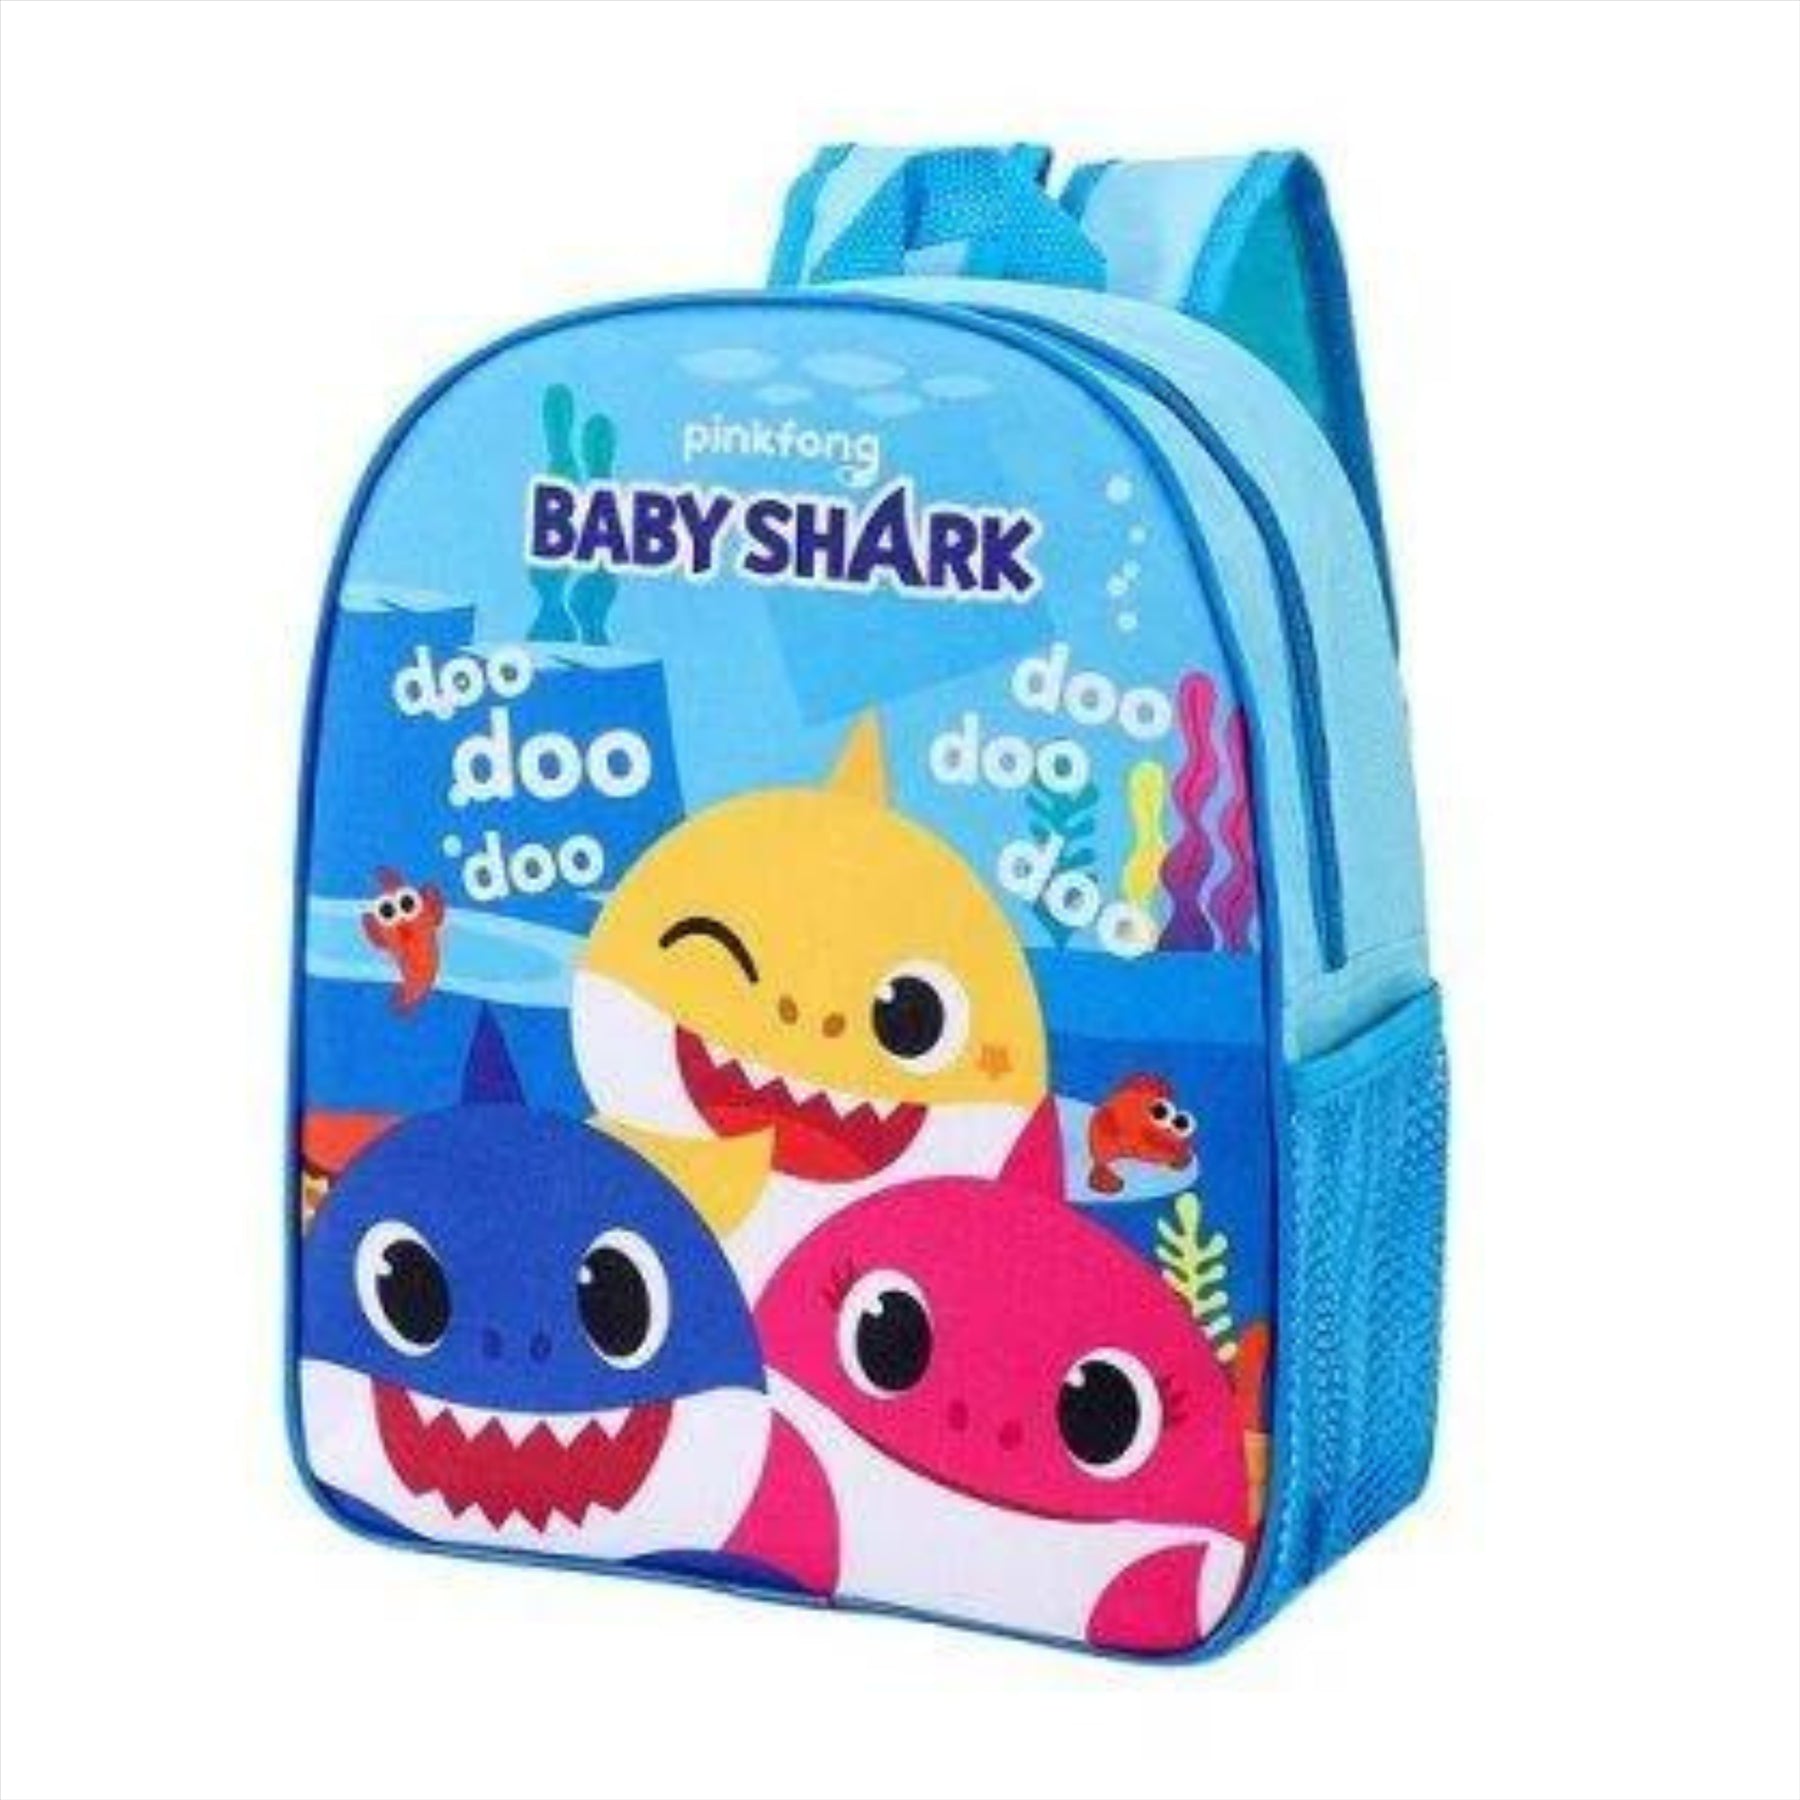 Pinkfong Baby Shark Junior Backpack - Kids Character School Bag with Mesh Side Pocket - Toptoys2u